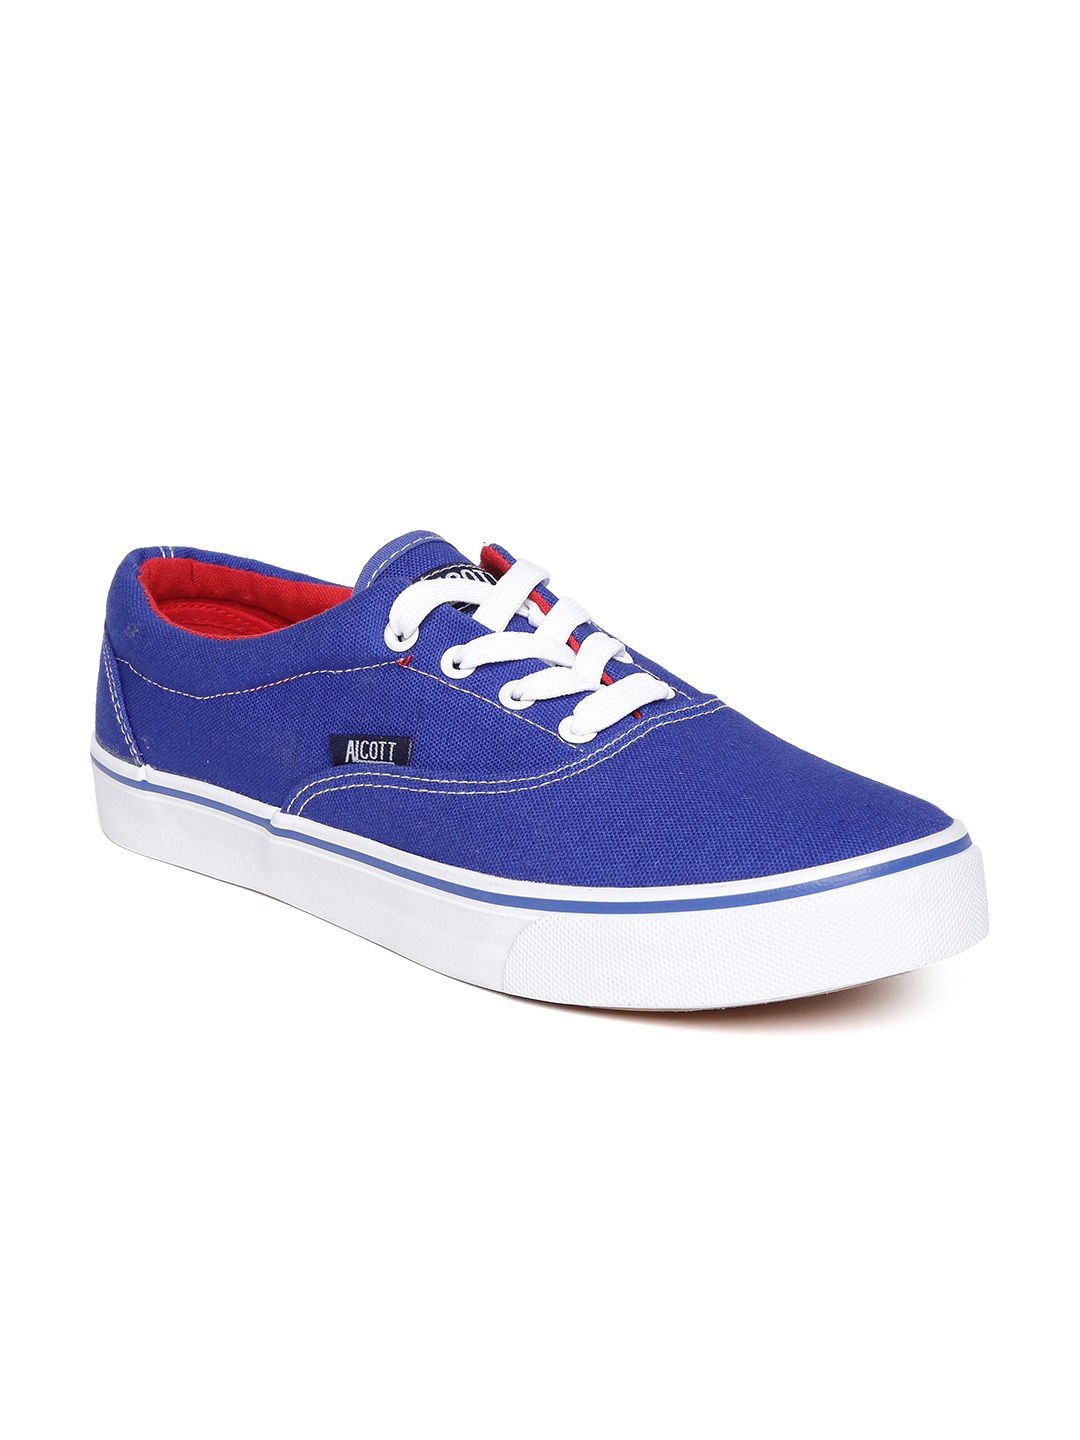 Buy ALCOTT Men Blue Canvas Shoes - Casual Shoes for Men 1347701 | Myntra